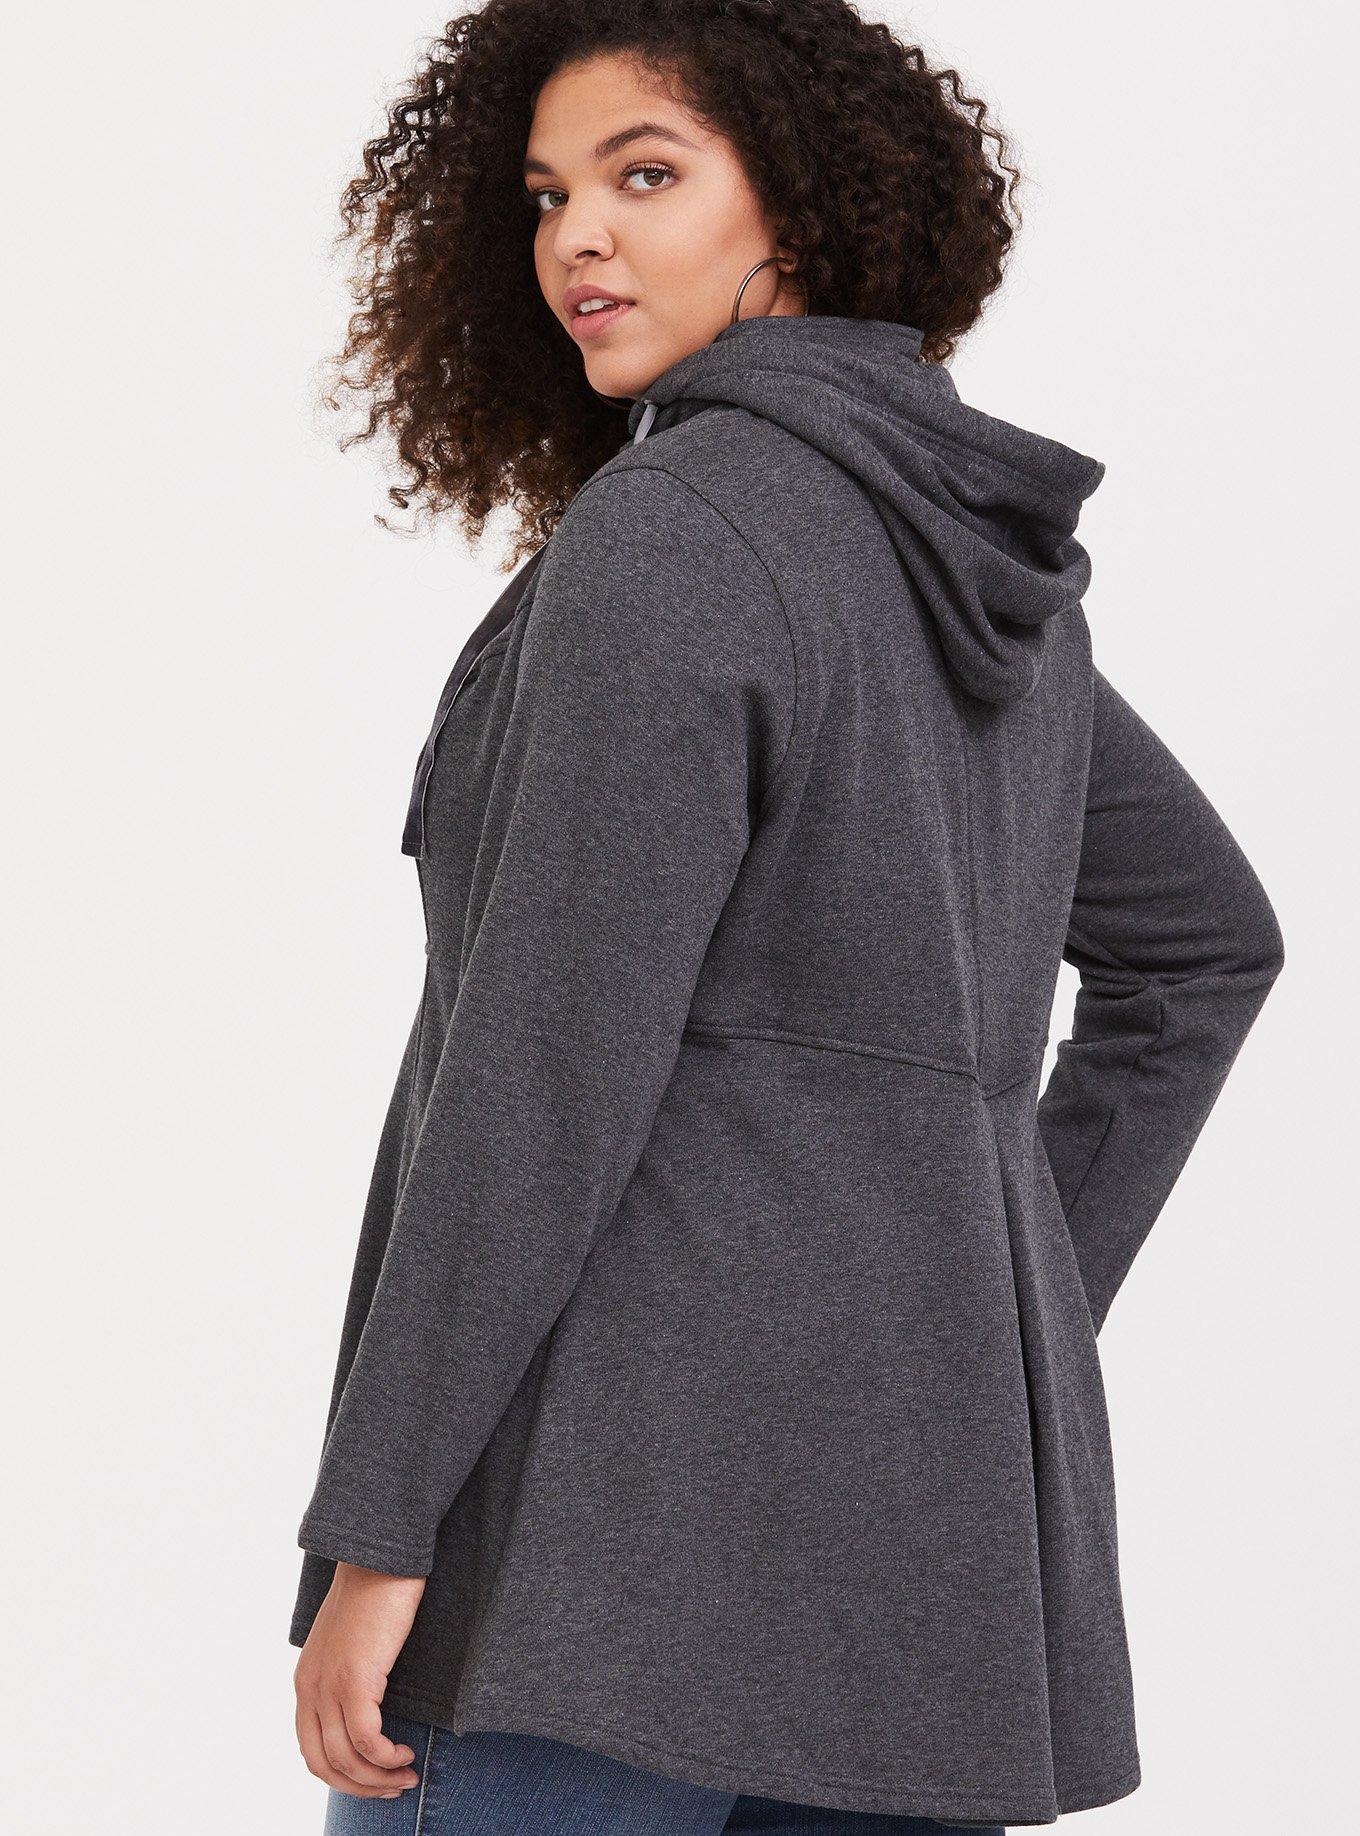 Plus Size - Charcoal Hooded Knit Coat - Torrid